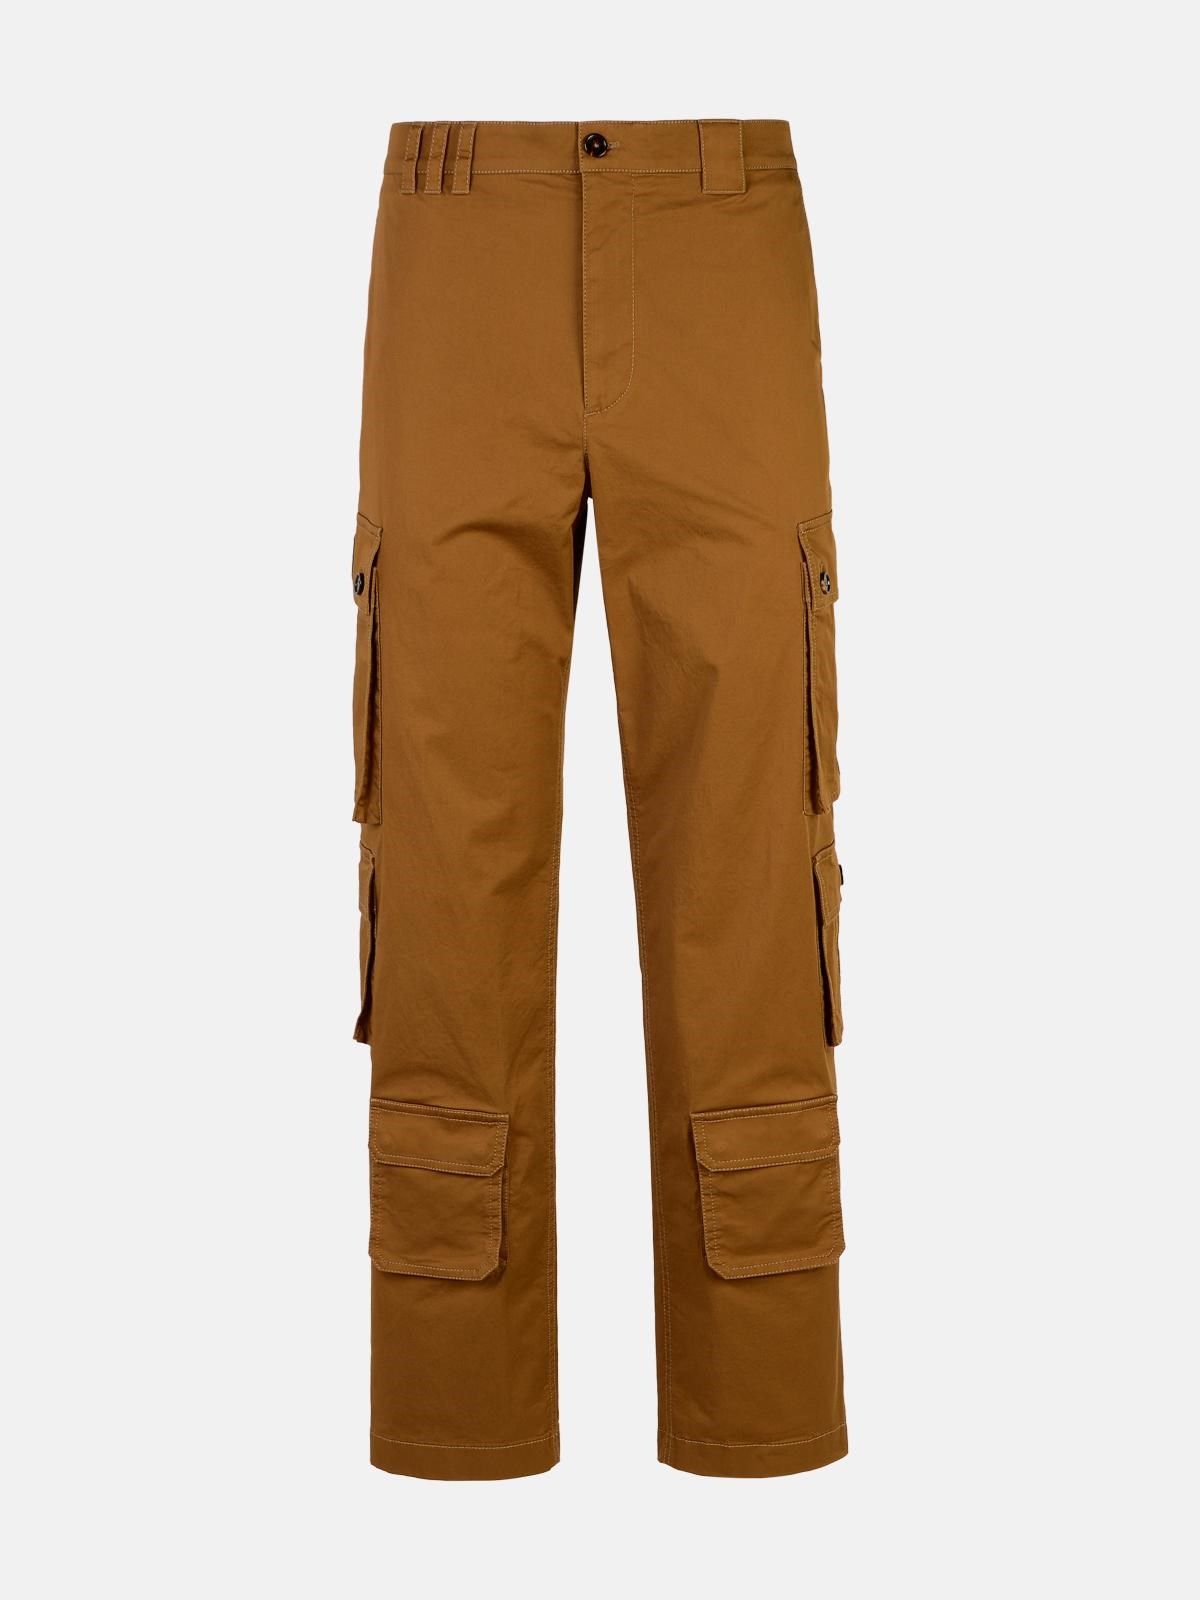 Dolce & Gabbana Brown Cotton Cargo Pants